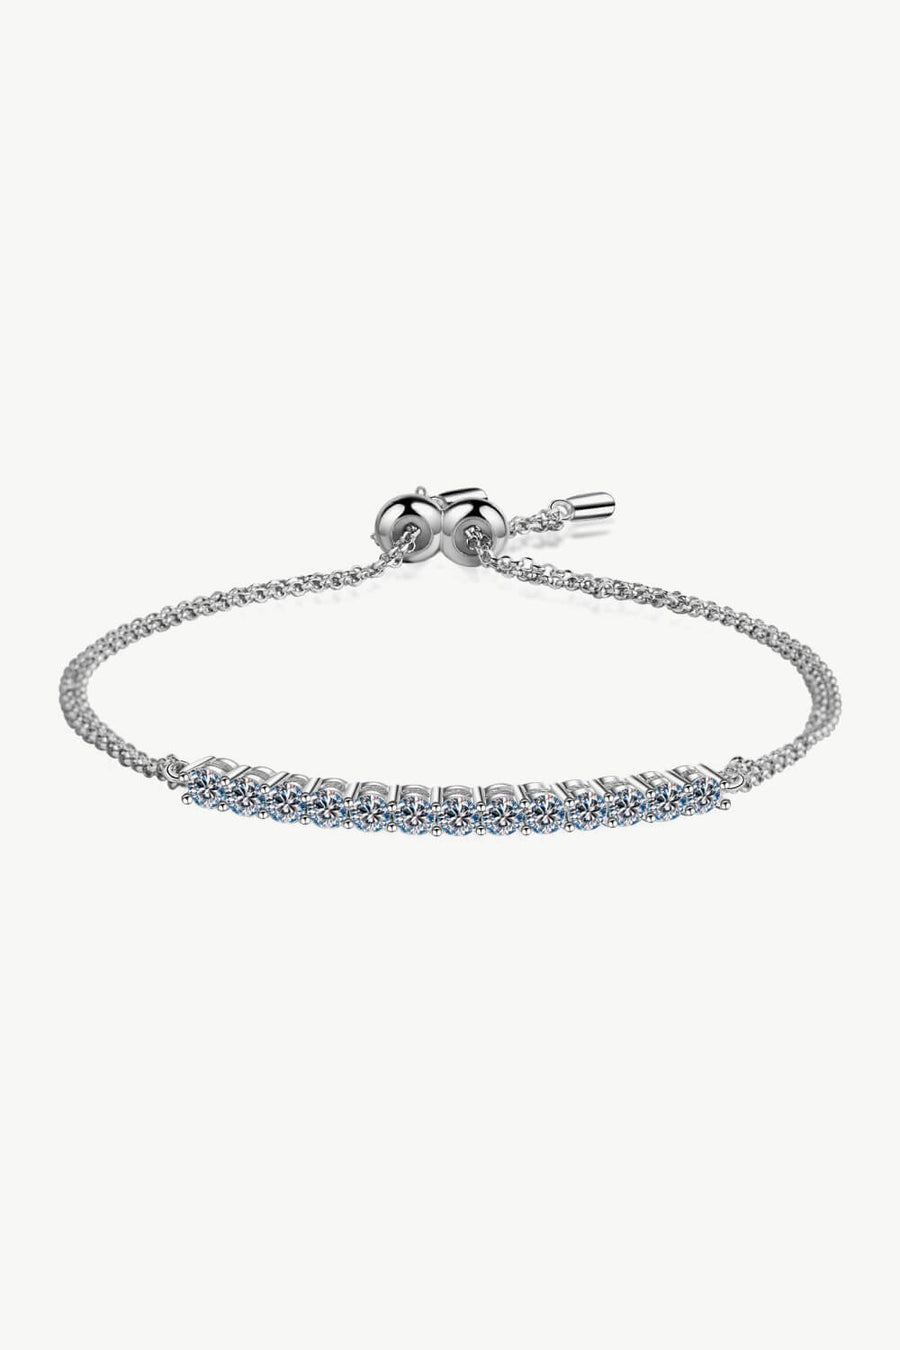 Best Diamond Bracelet Jewelry Gifts for Women | 1.3 Carat Diamond Bracelet | MASON New York